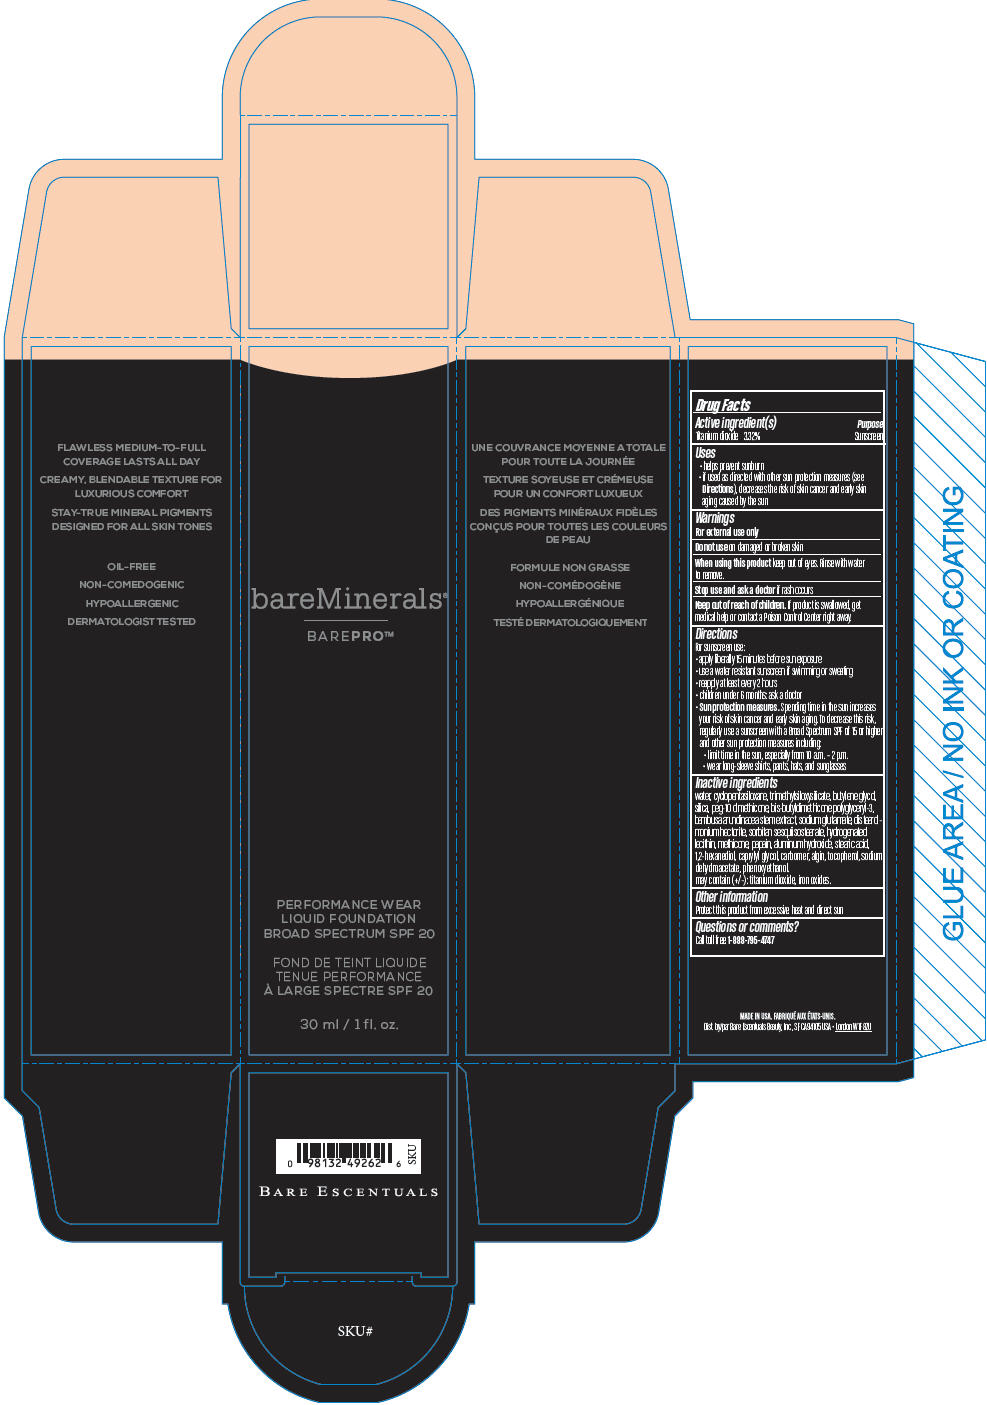 PRINCIPAL DISPLAY PANEL - 30 ml Bottle Carton - Hazelnut 25